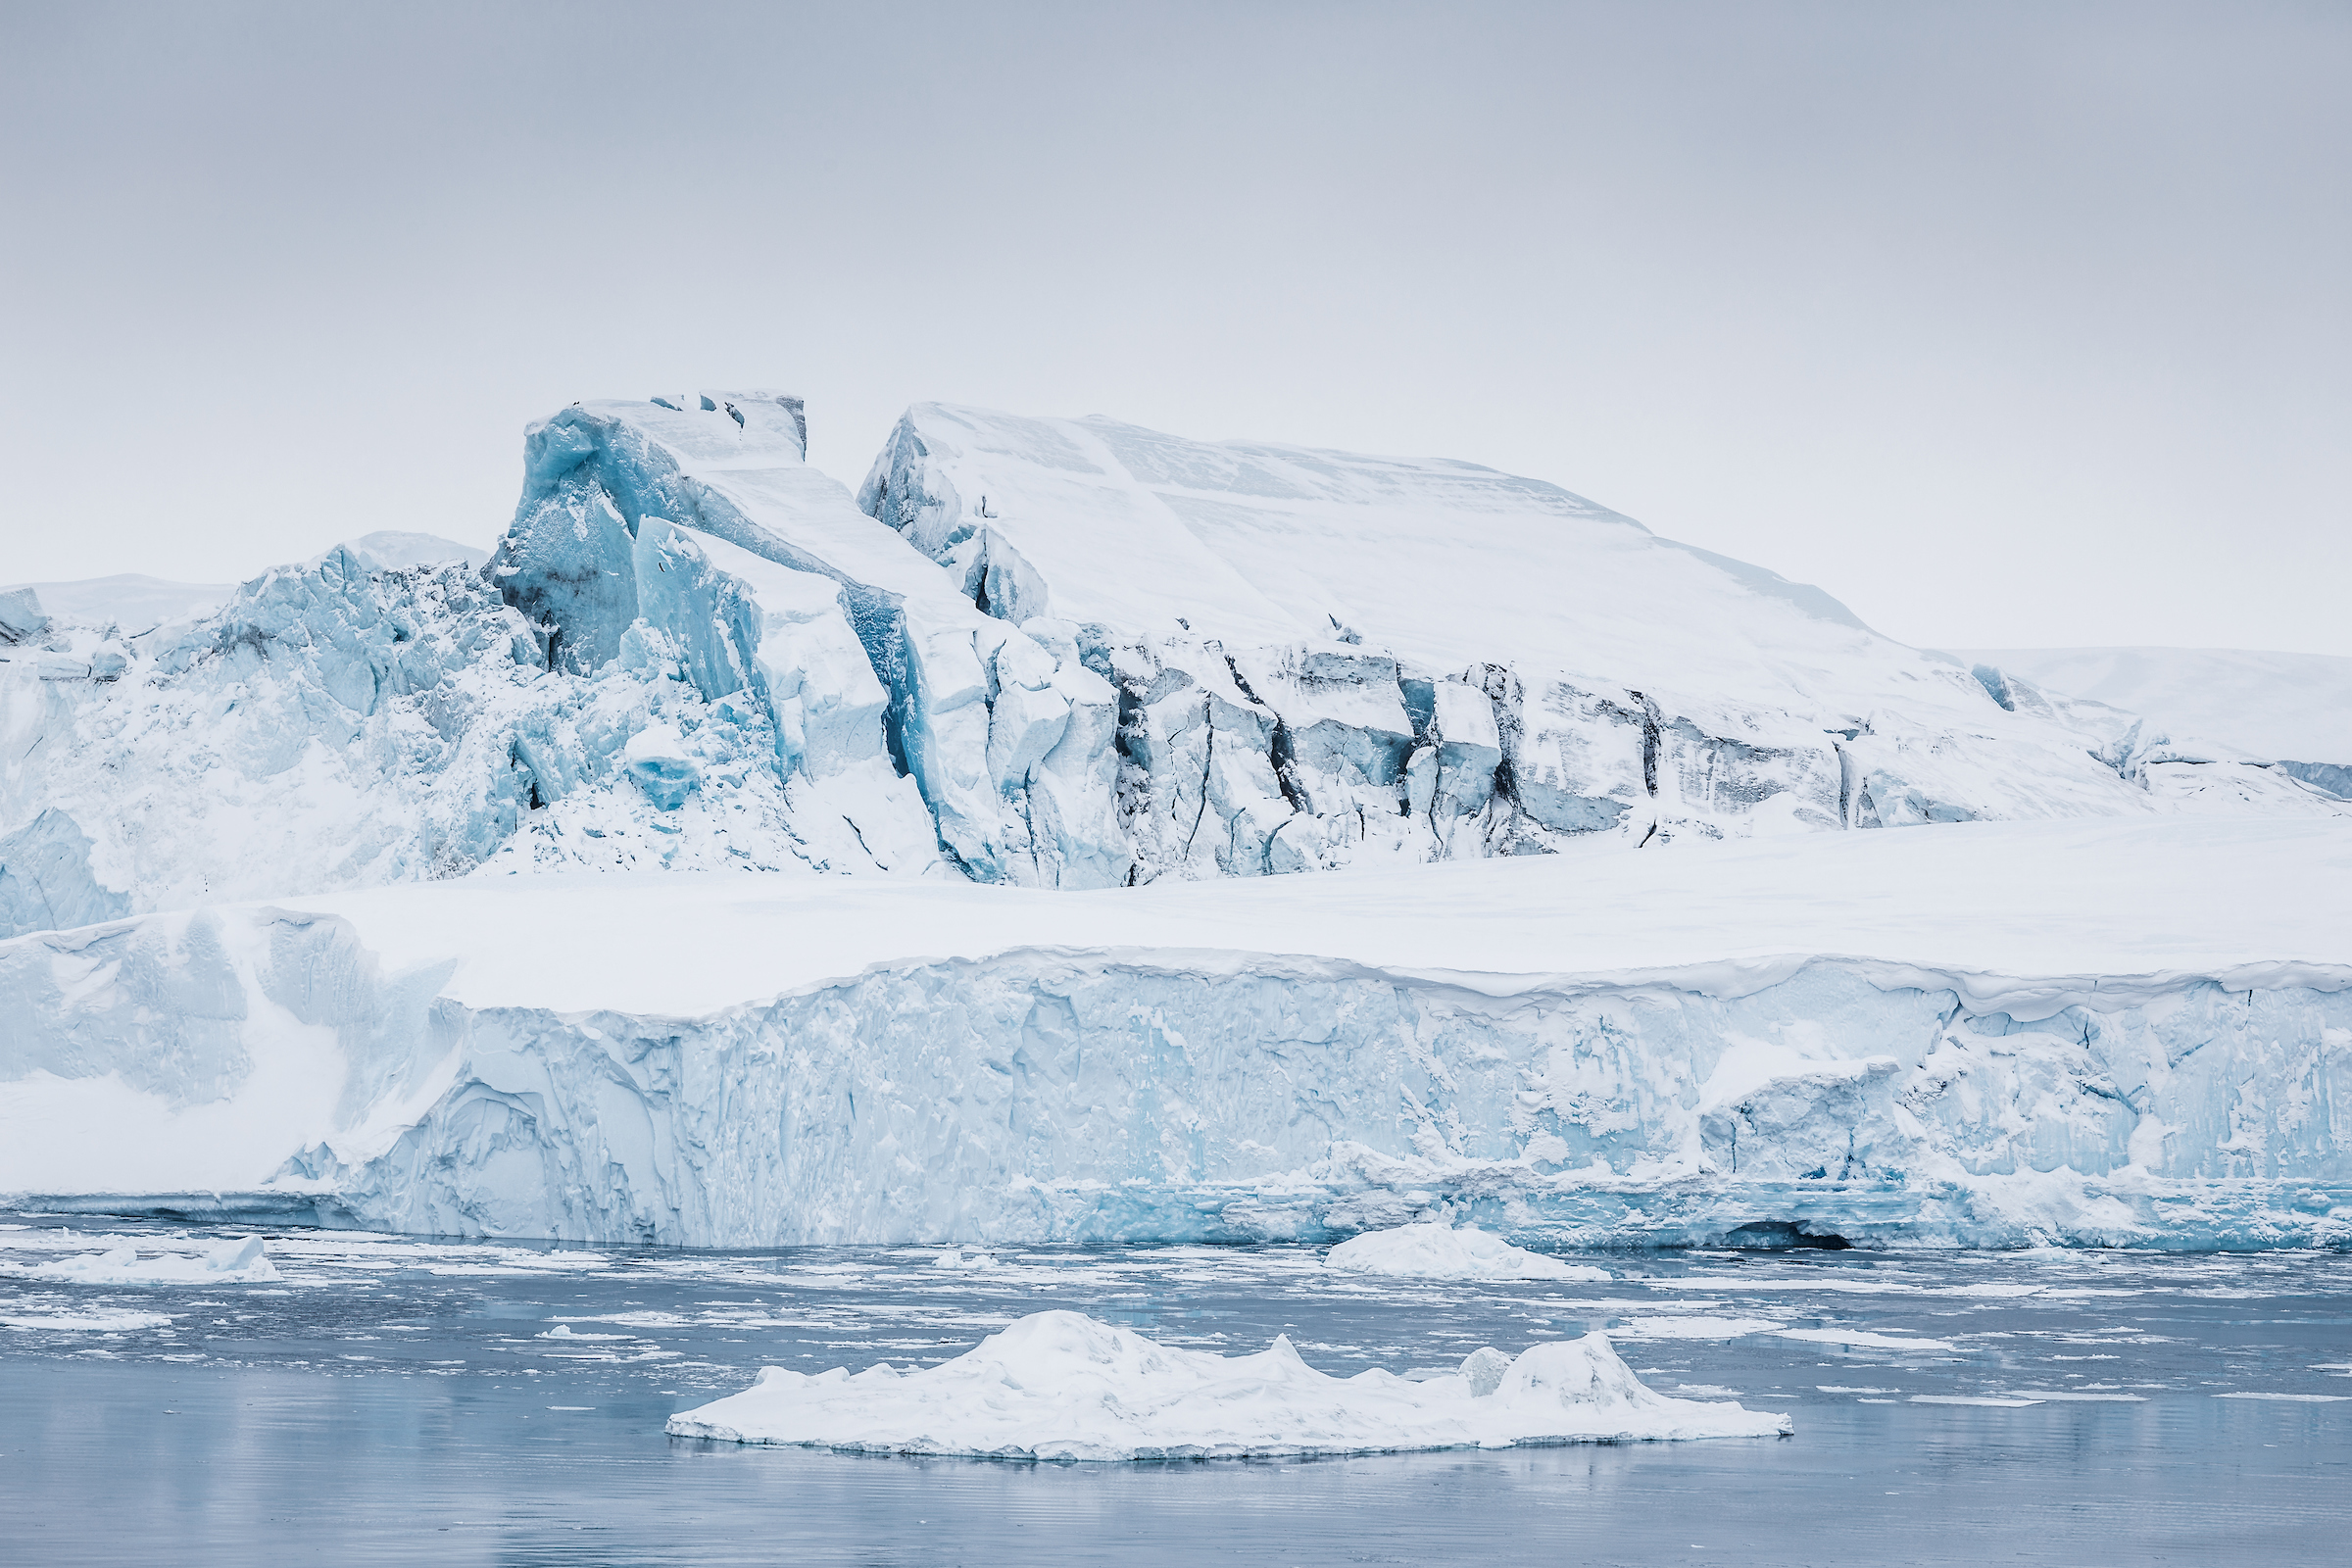 Icebergs - Nature's Giants - [Visit Greenland!]